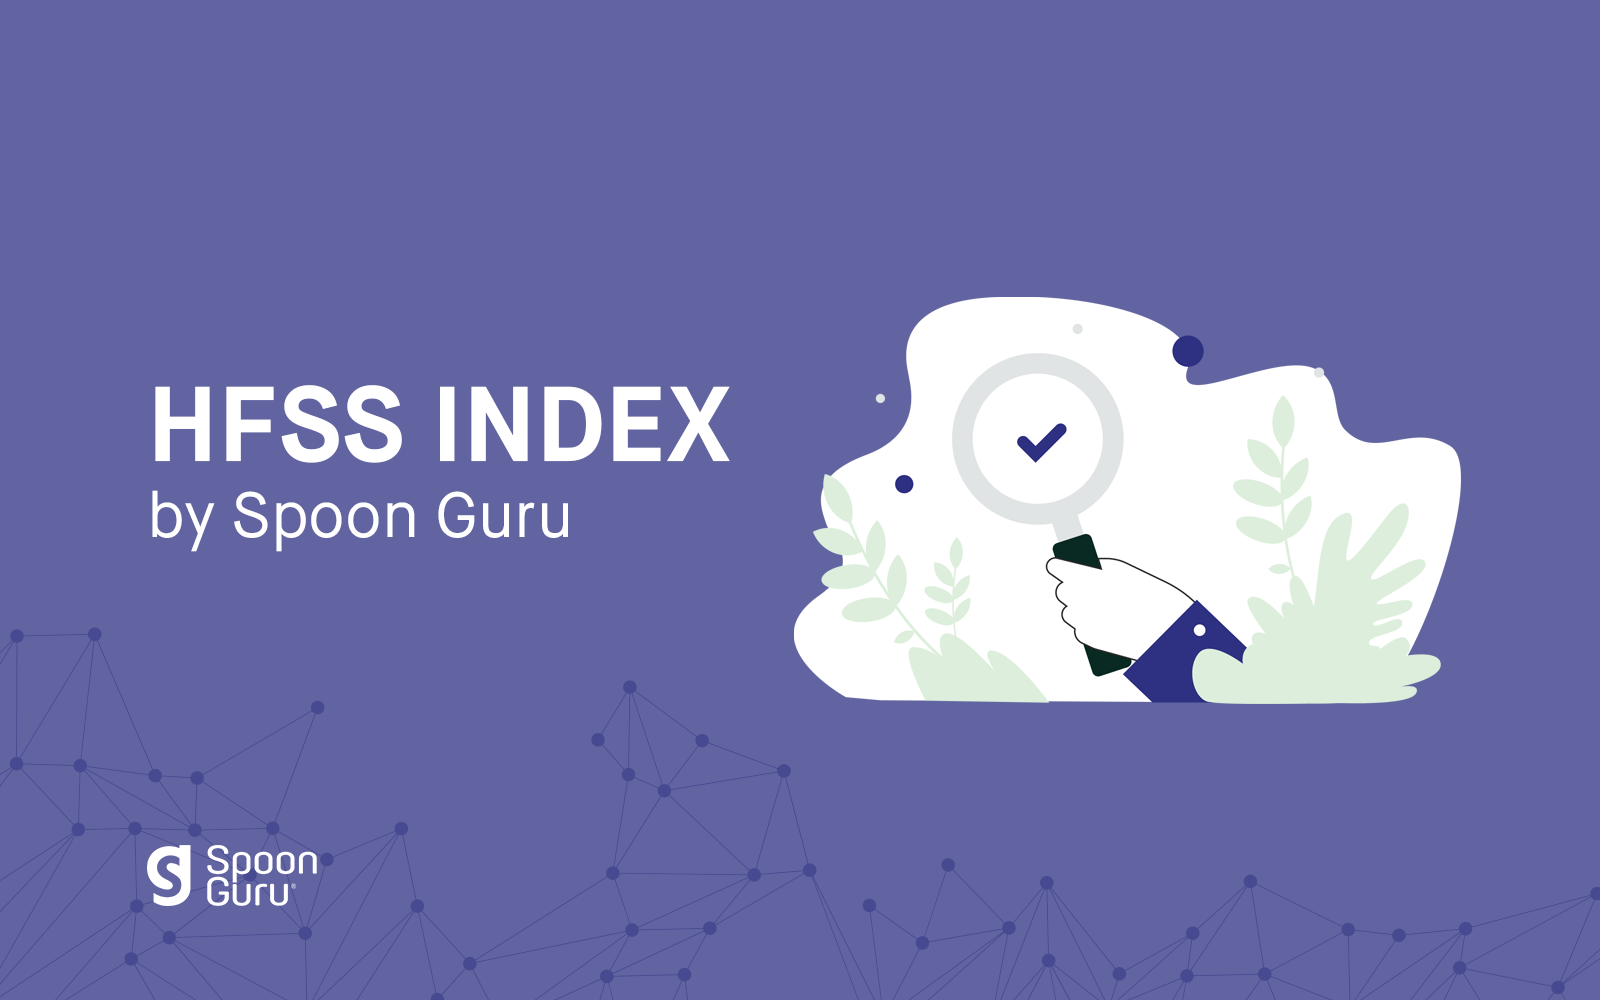 HFSS Index by Spoon Guru